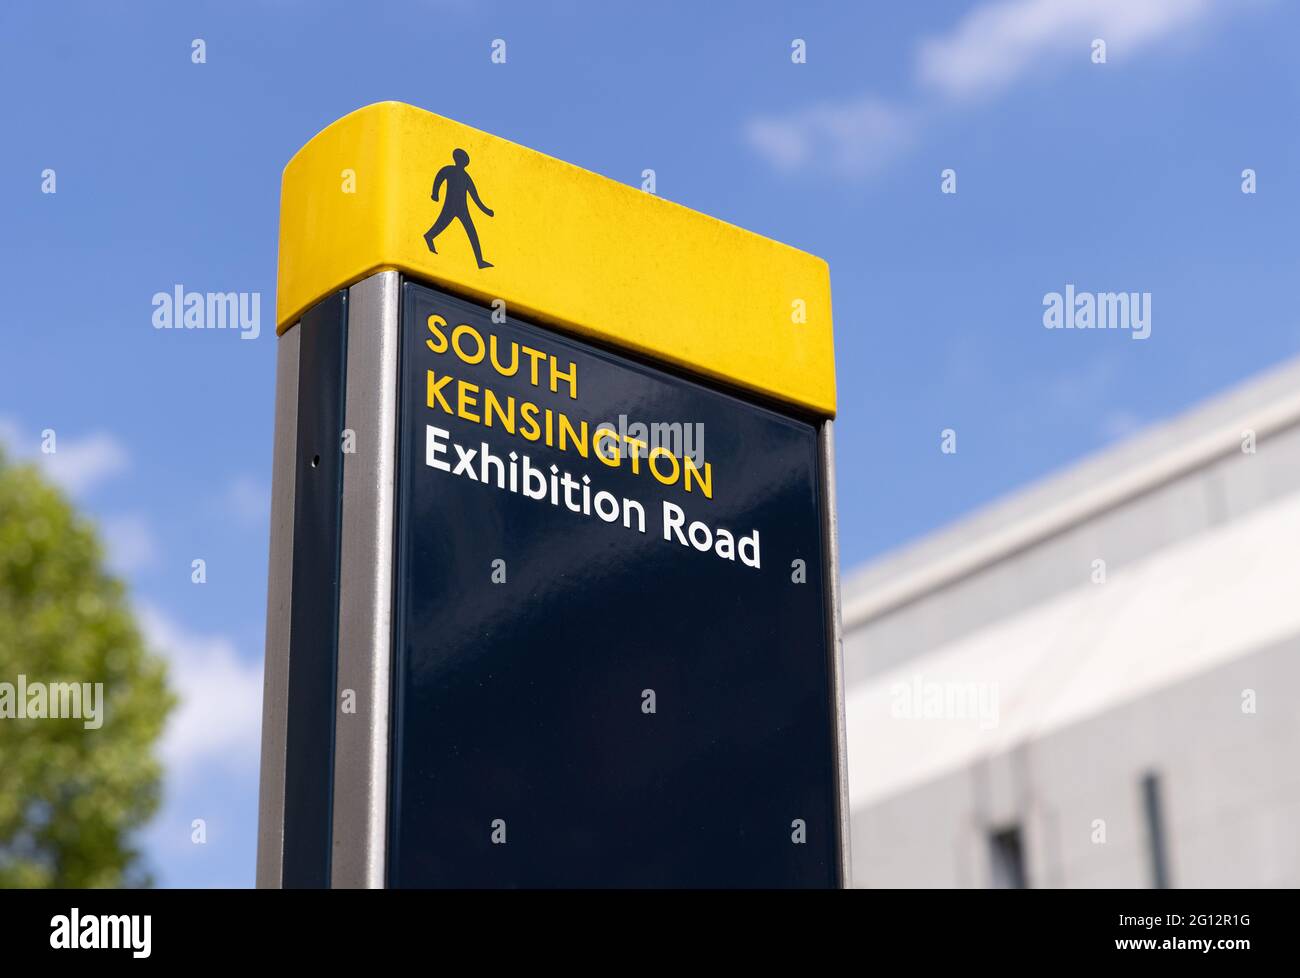 South Kensington Exhibition road sign, South Kensington London UK Stock Photo